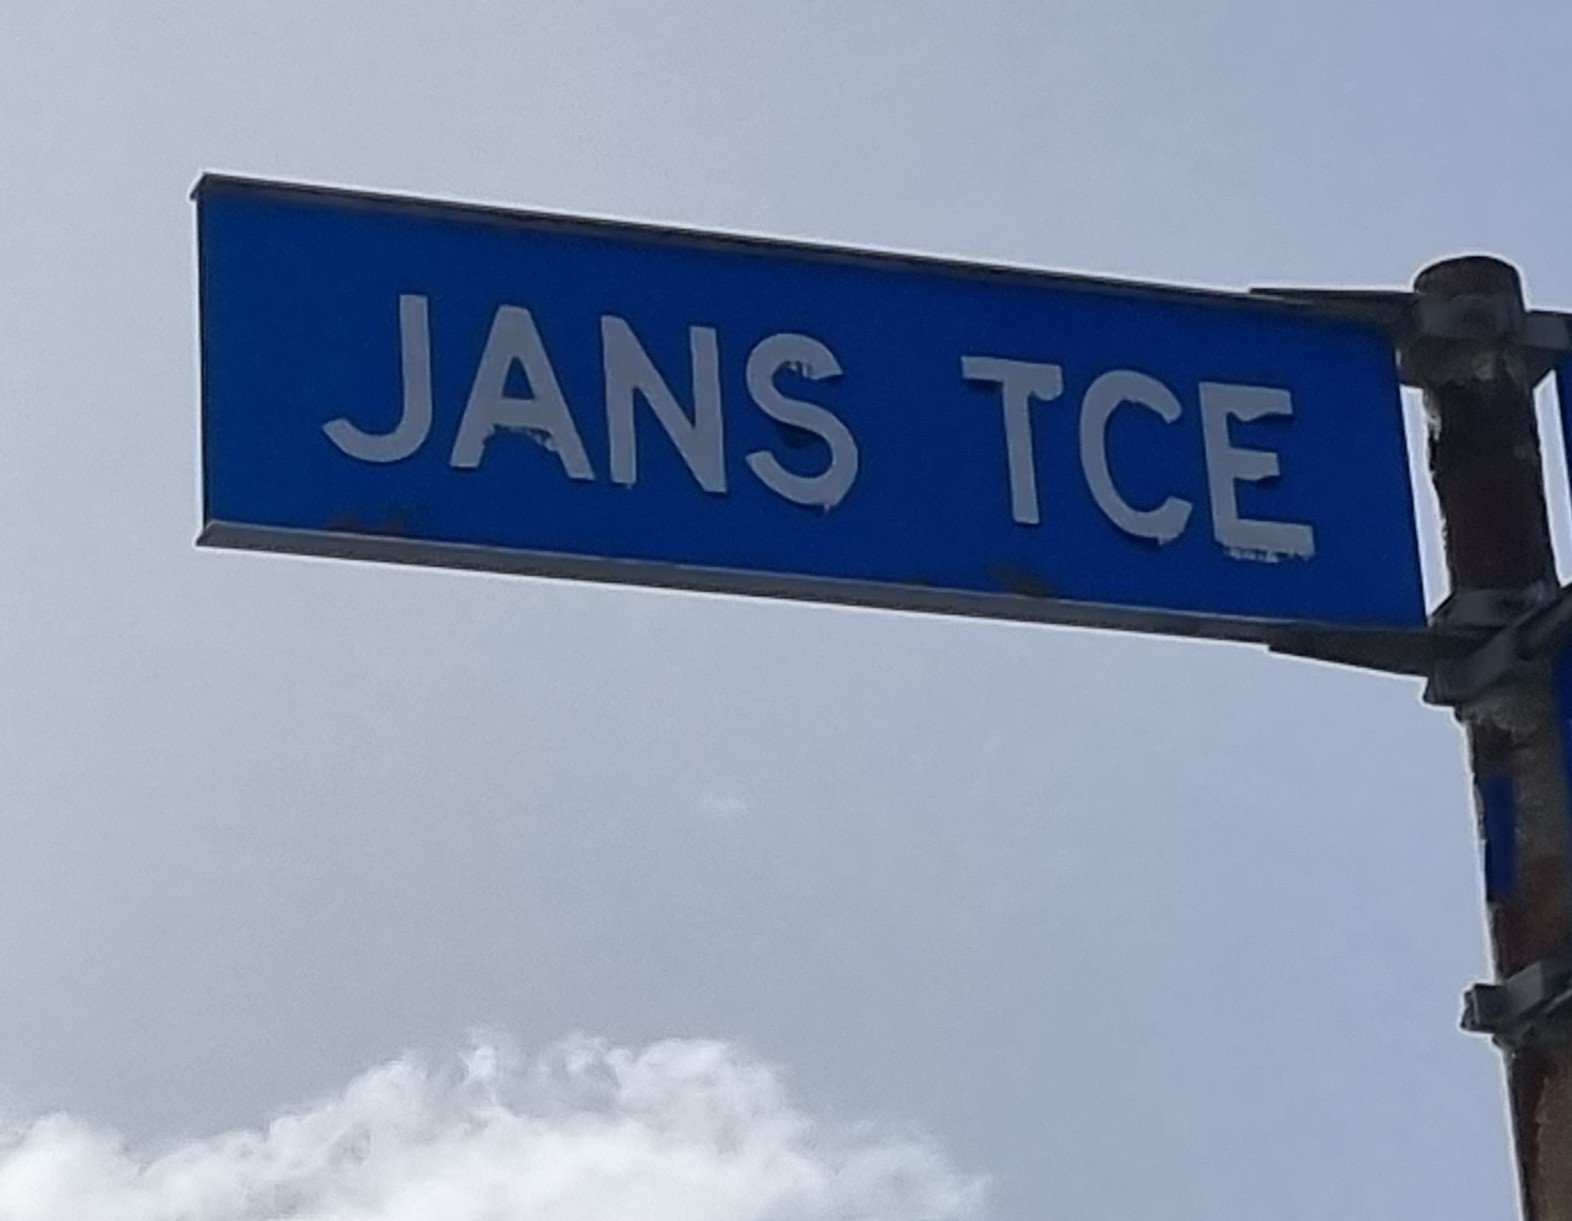 Jans Tce street sign.jpg